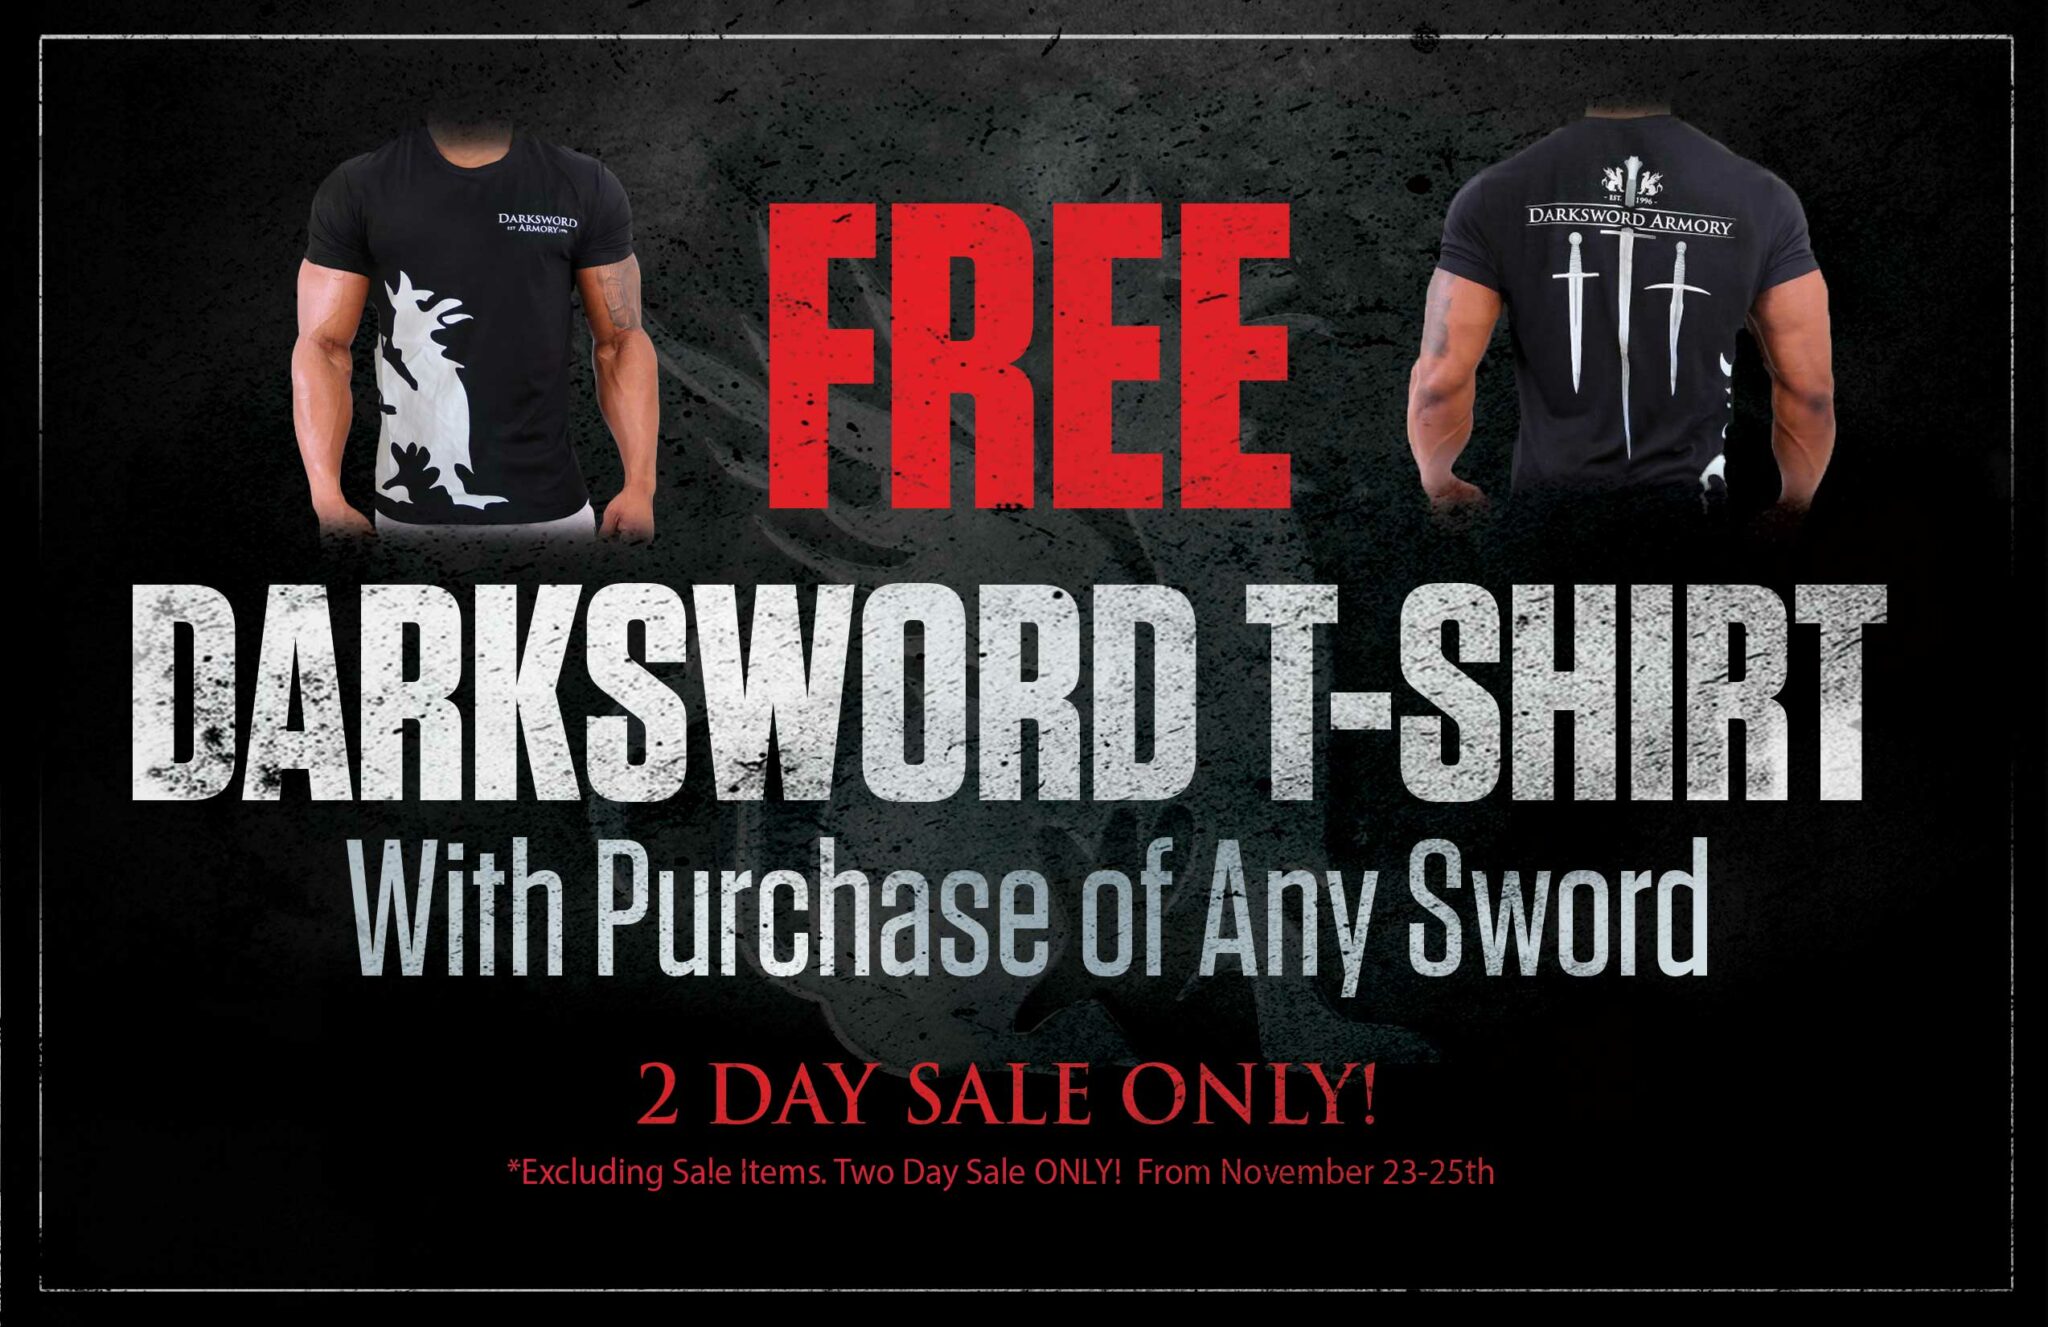 free-t-shirt-promo-darksword-armory